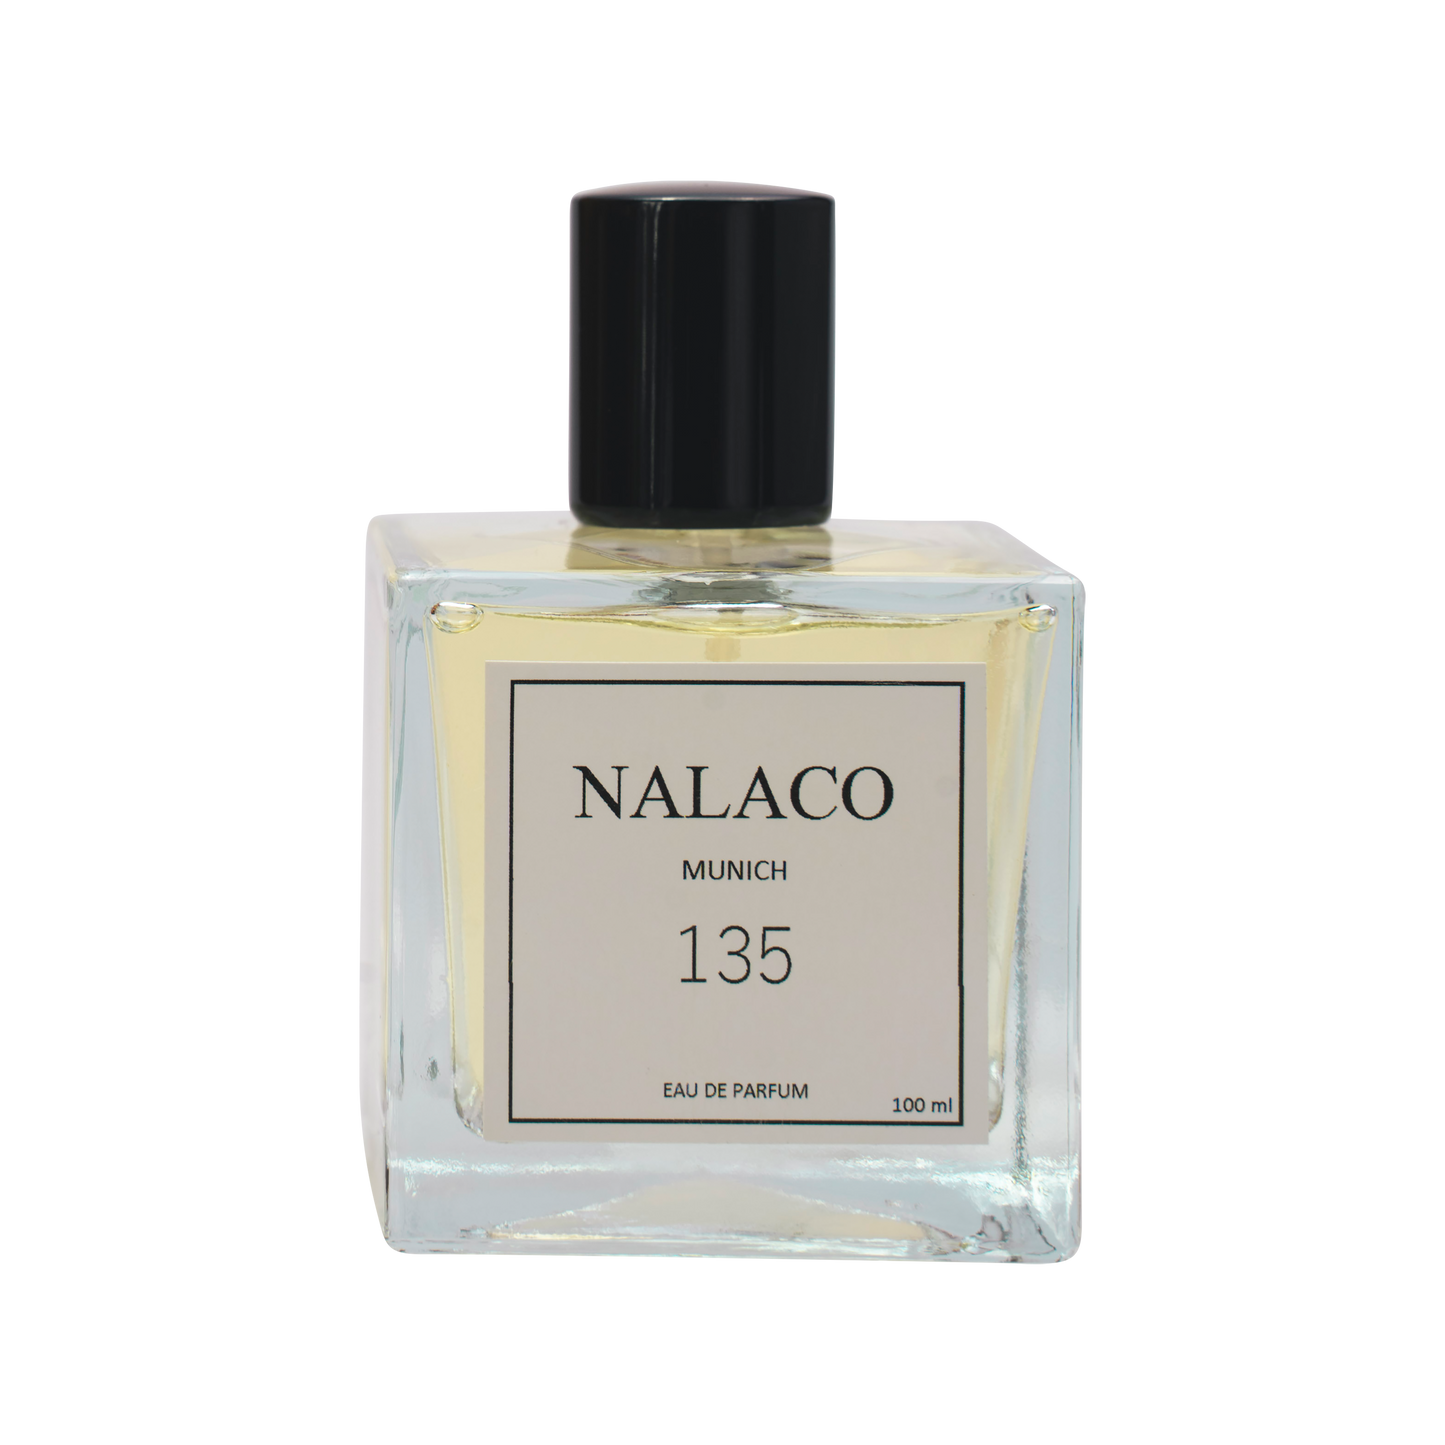 Nalaco No. 135 inspired by Chanel Bleu